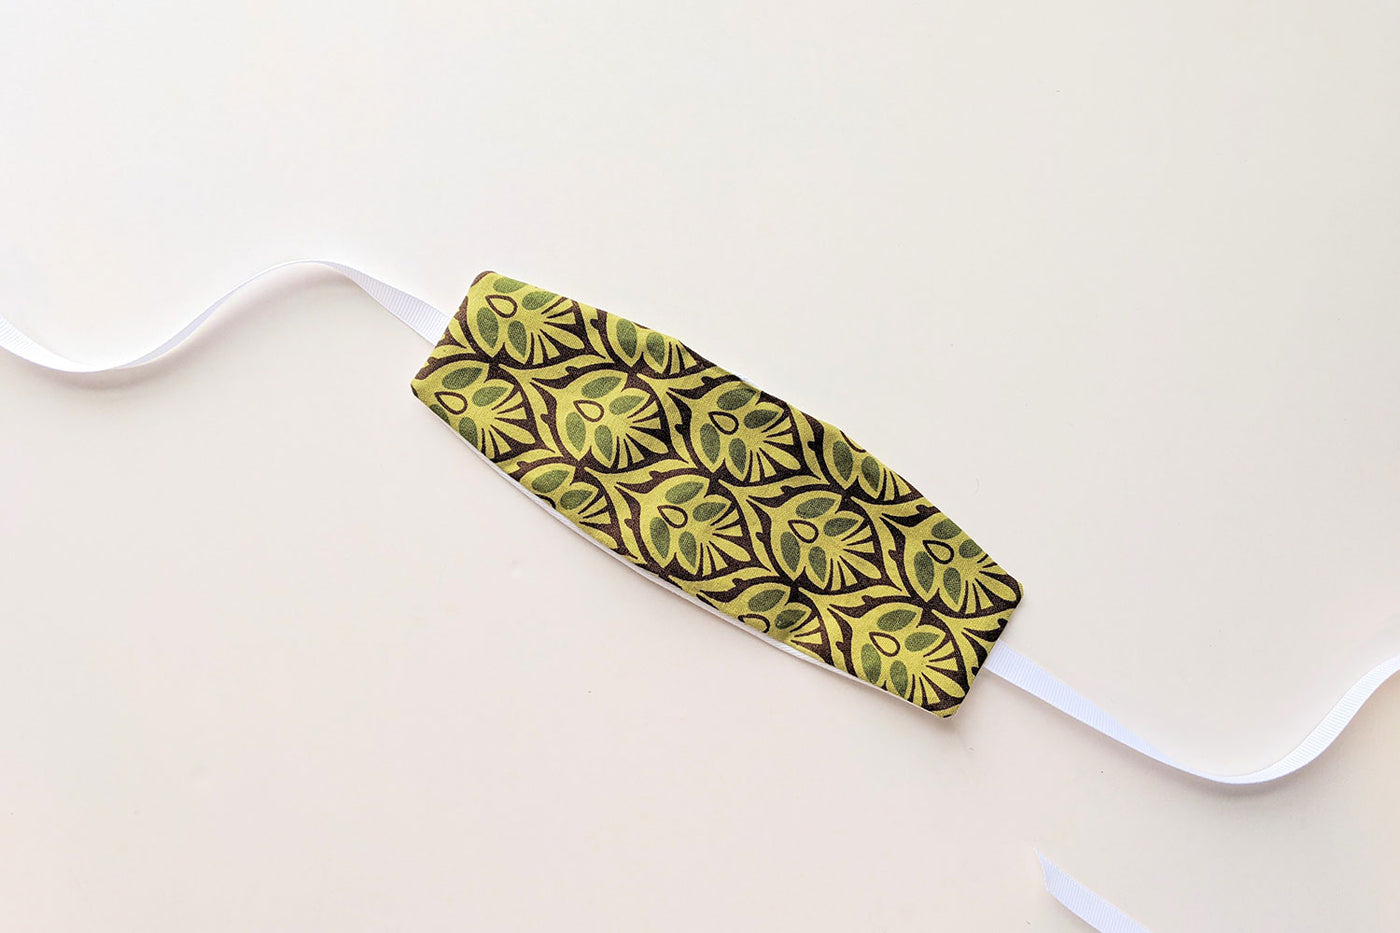 Fabric headband ITH applique embroidery design file